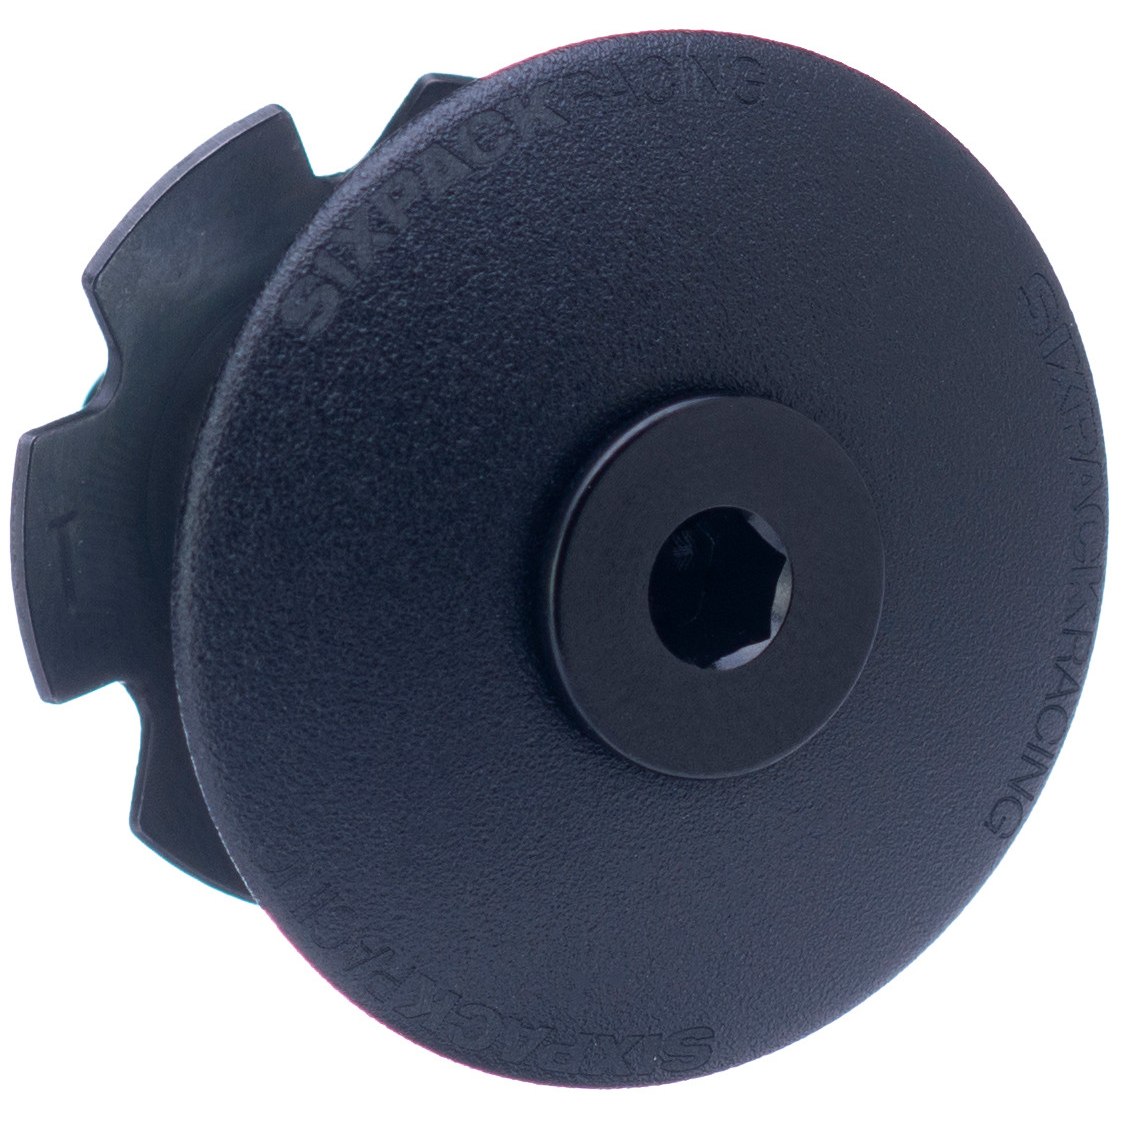 Productfoto van Sixpack Menace 1 1/8 Inch Ahead Cap - stealth black